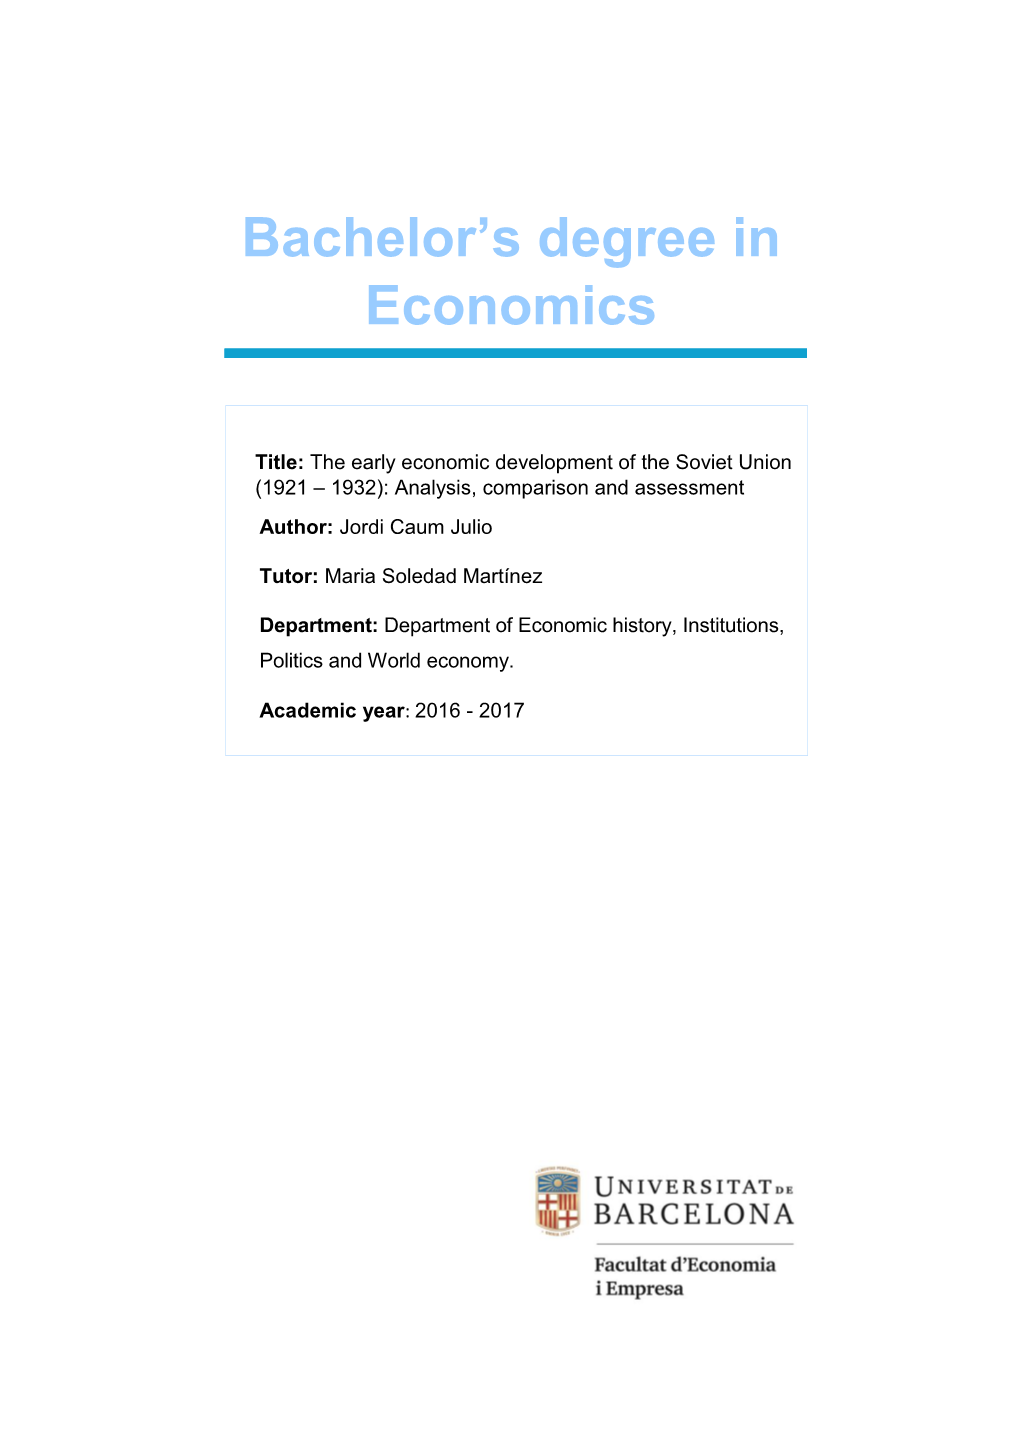 Bachelor's Degree in Economics